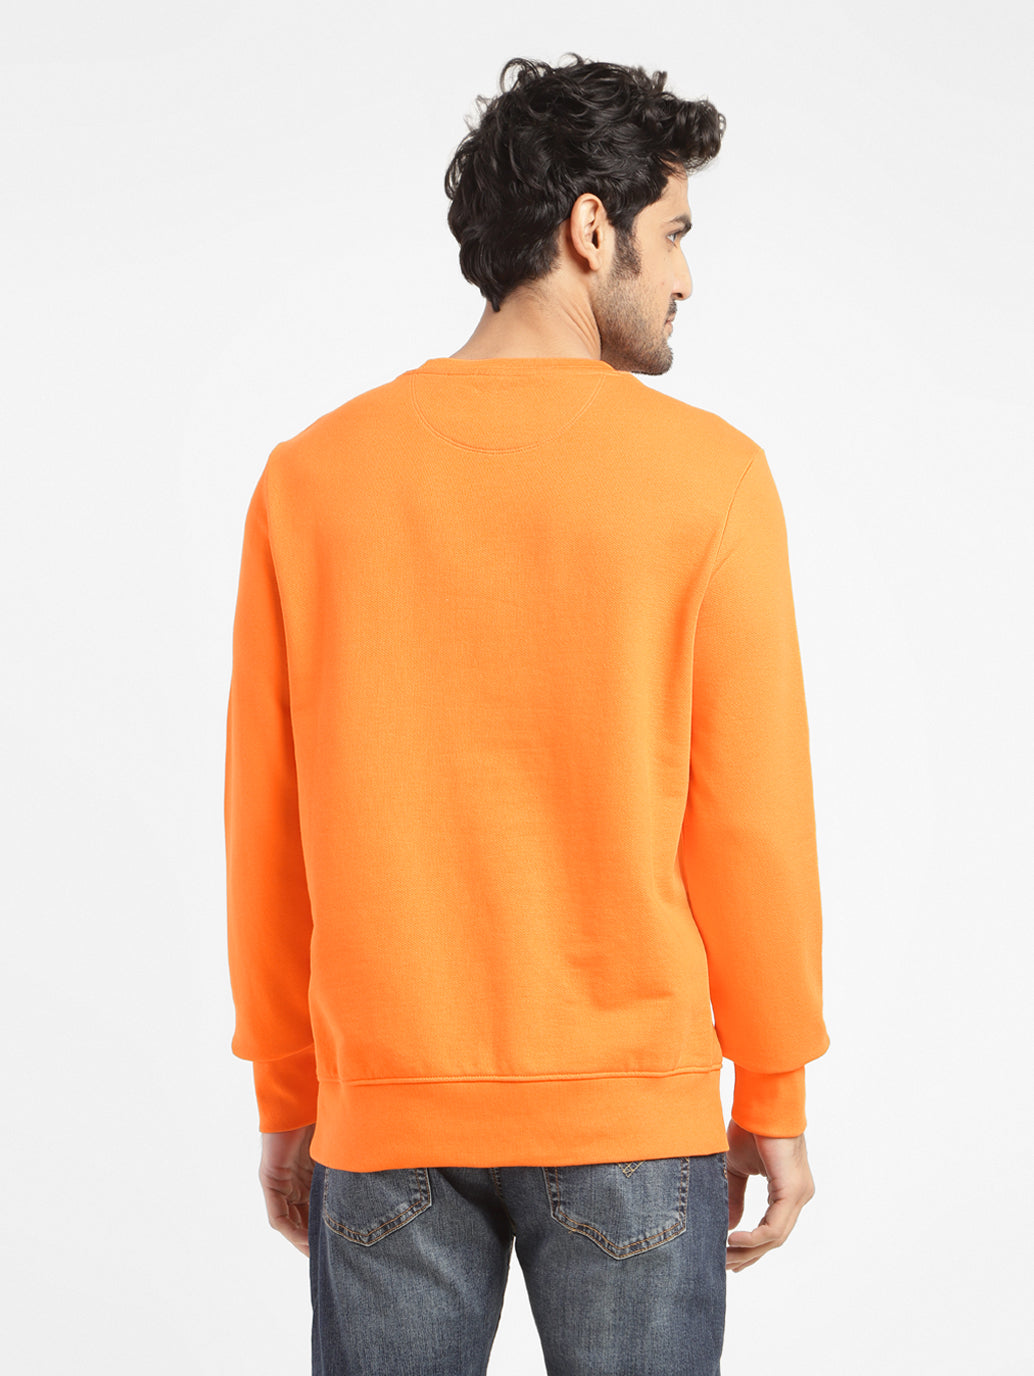 Men's Graphic Print Crew Neck Sweatshirt Orange